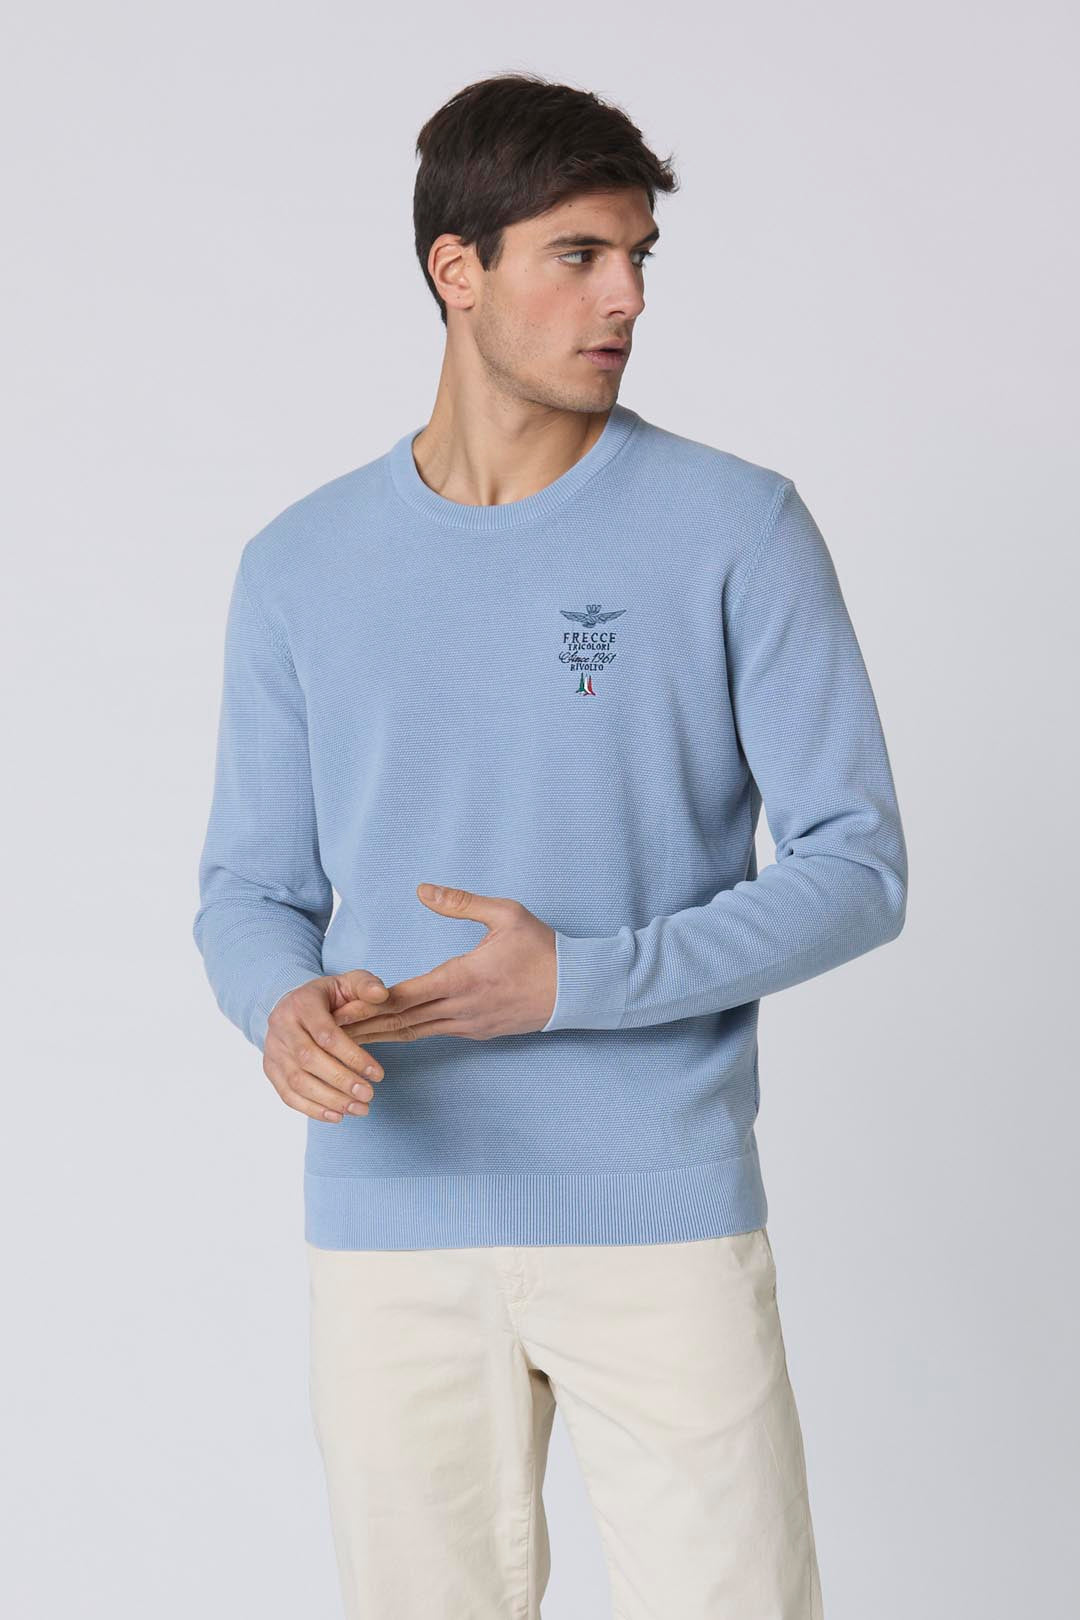 Cotton rice stitch crewneck sweater